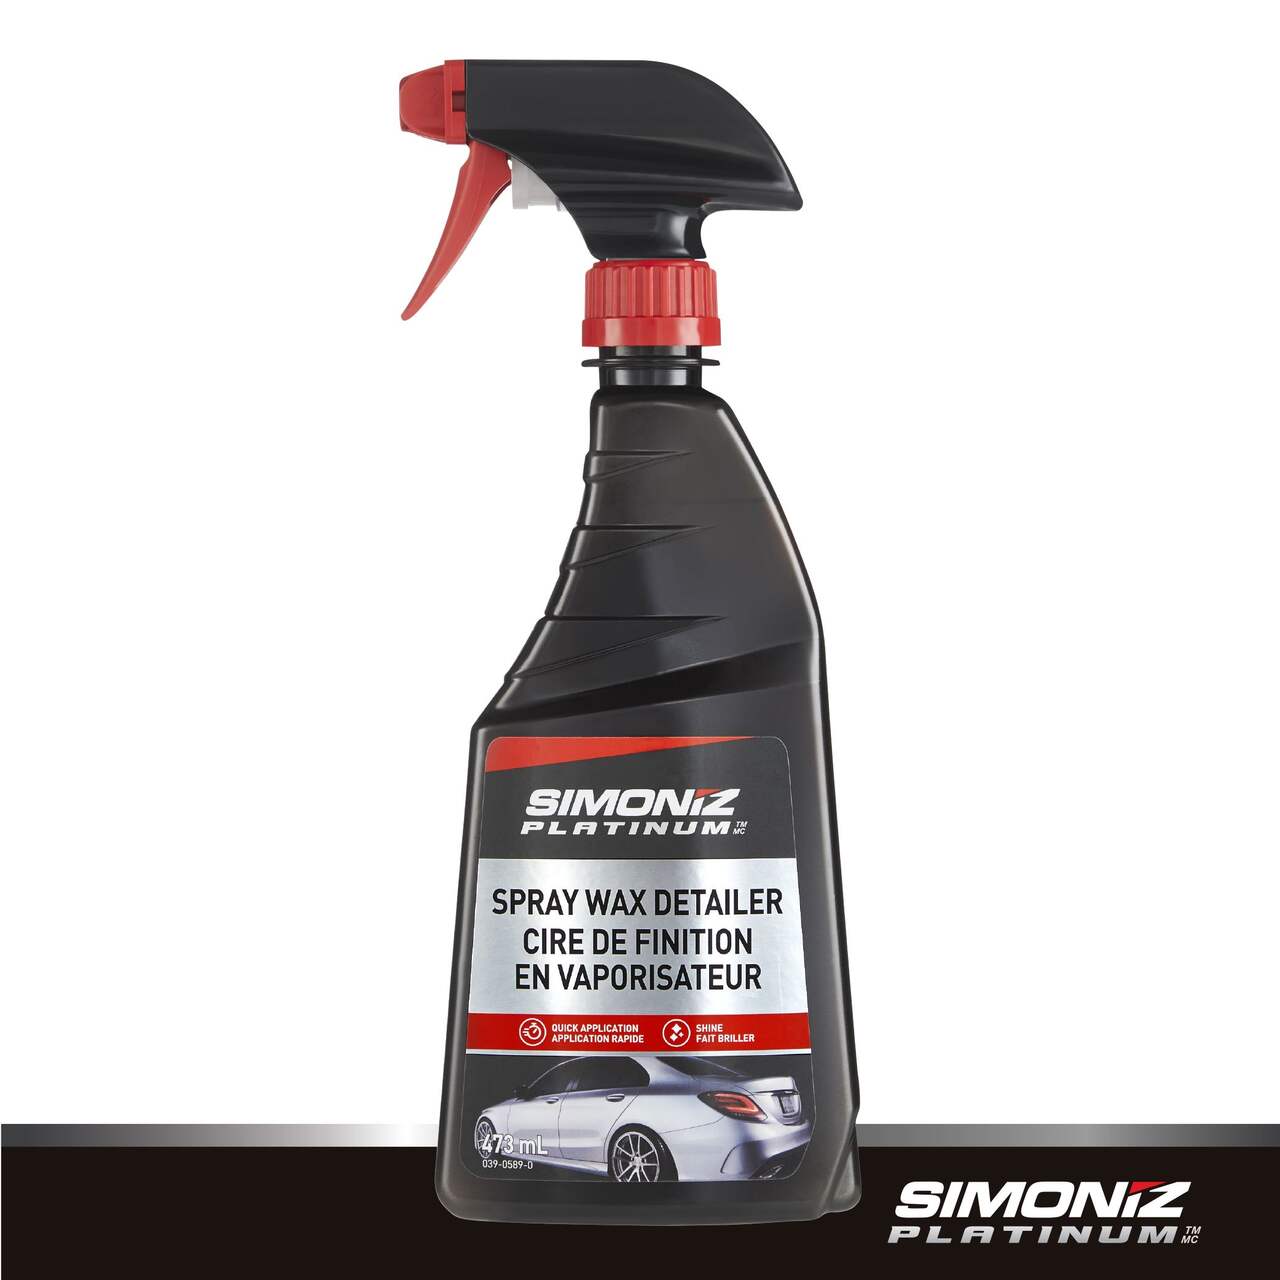 SIMONIZ Platinum Car Interior Protectant Spray, 750-mL